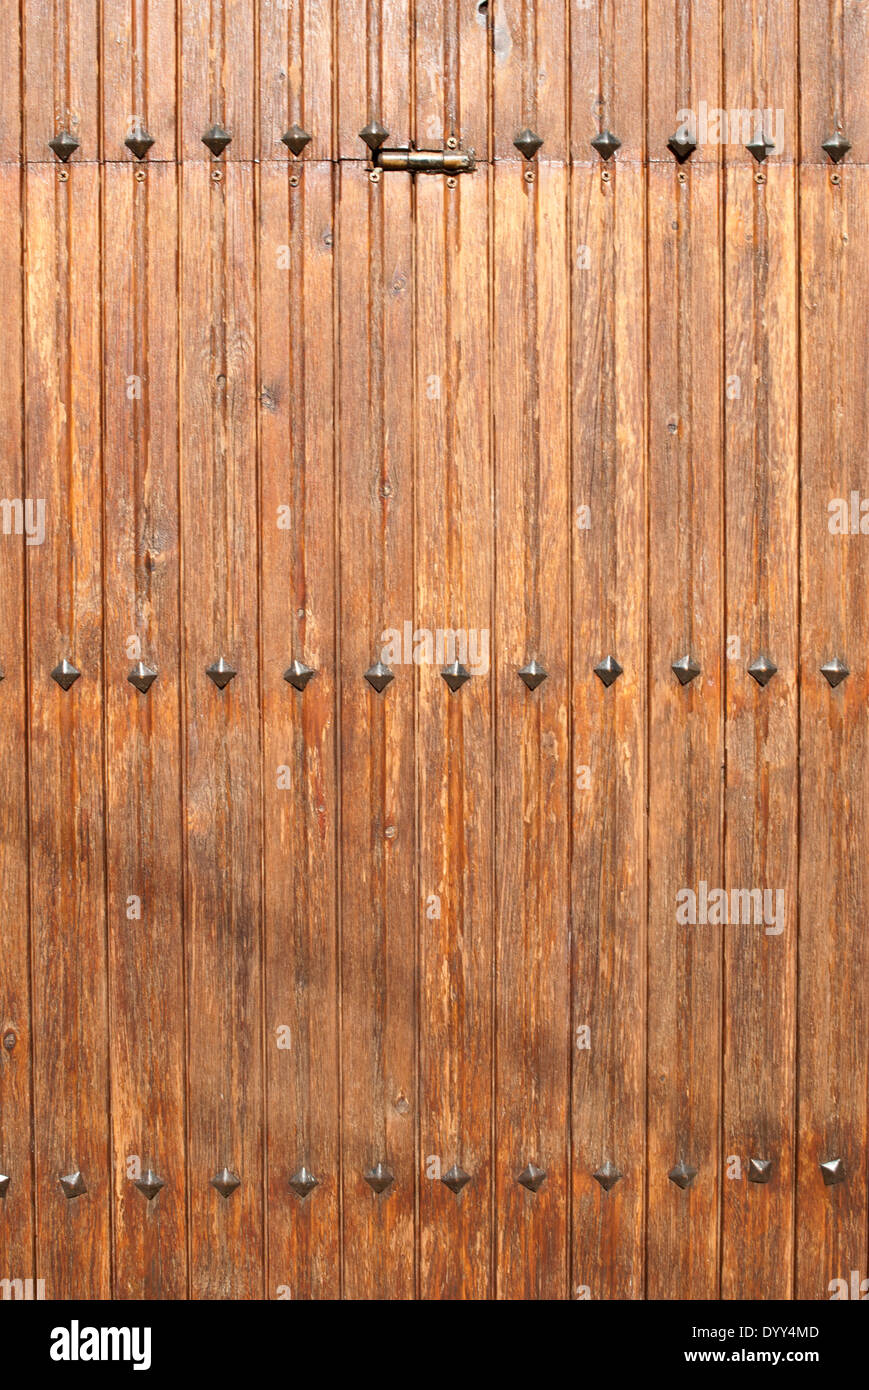 La textura de una puerta de madera. Vertical Fotografía de stock - Alamy